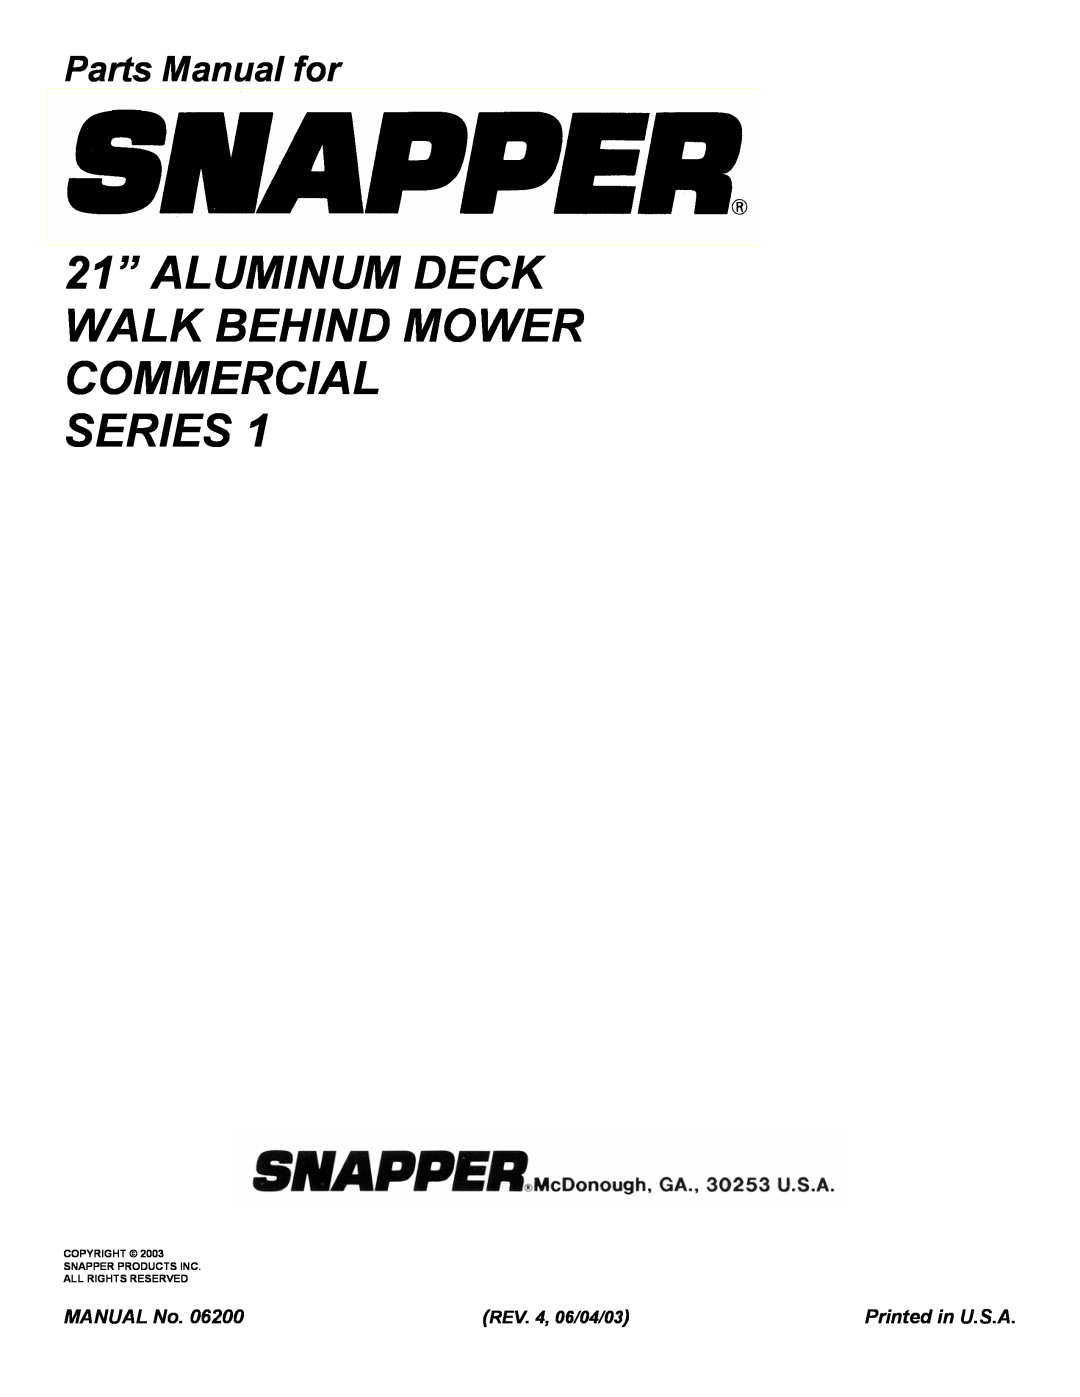 Snapper ECLP21551HV 21” ALUMINUM DECK WALK BEHIND MOWER COMMERCIAL SERIES, Parts Manual for, MANUAL No, REV. 4, 06/04/03 